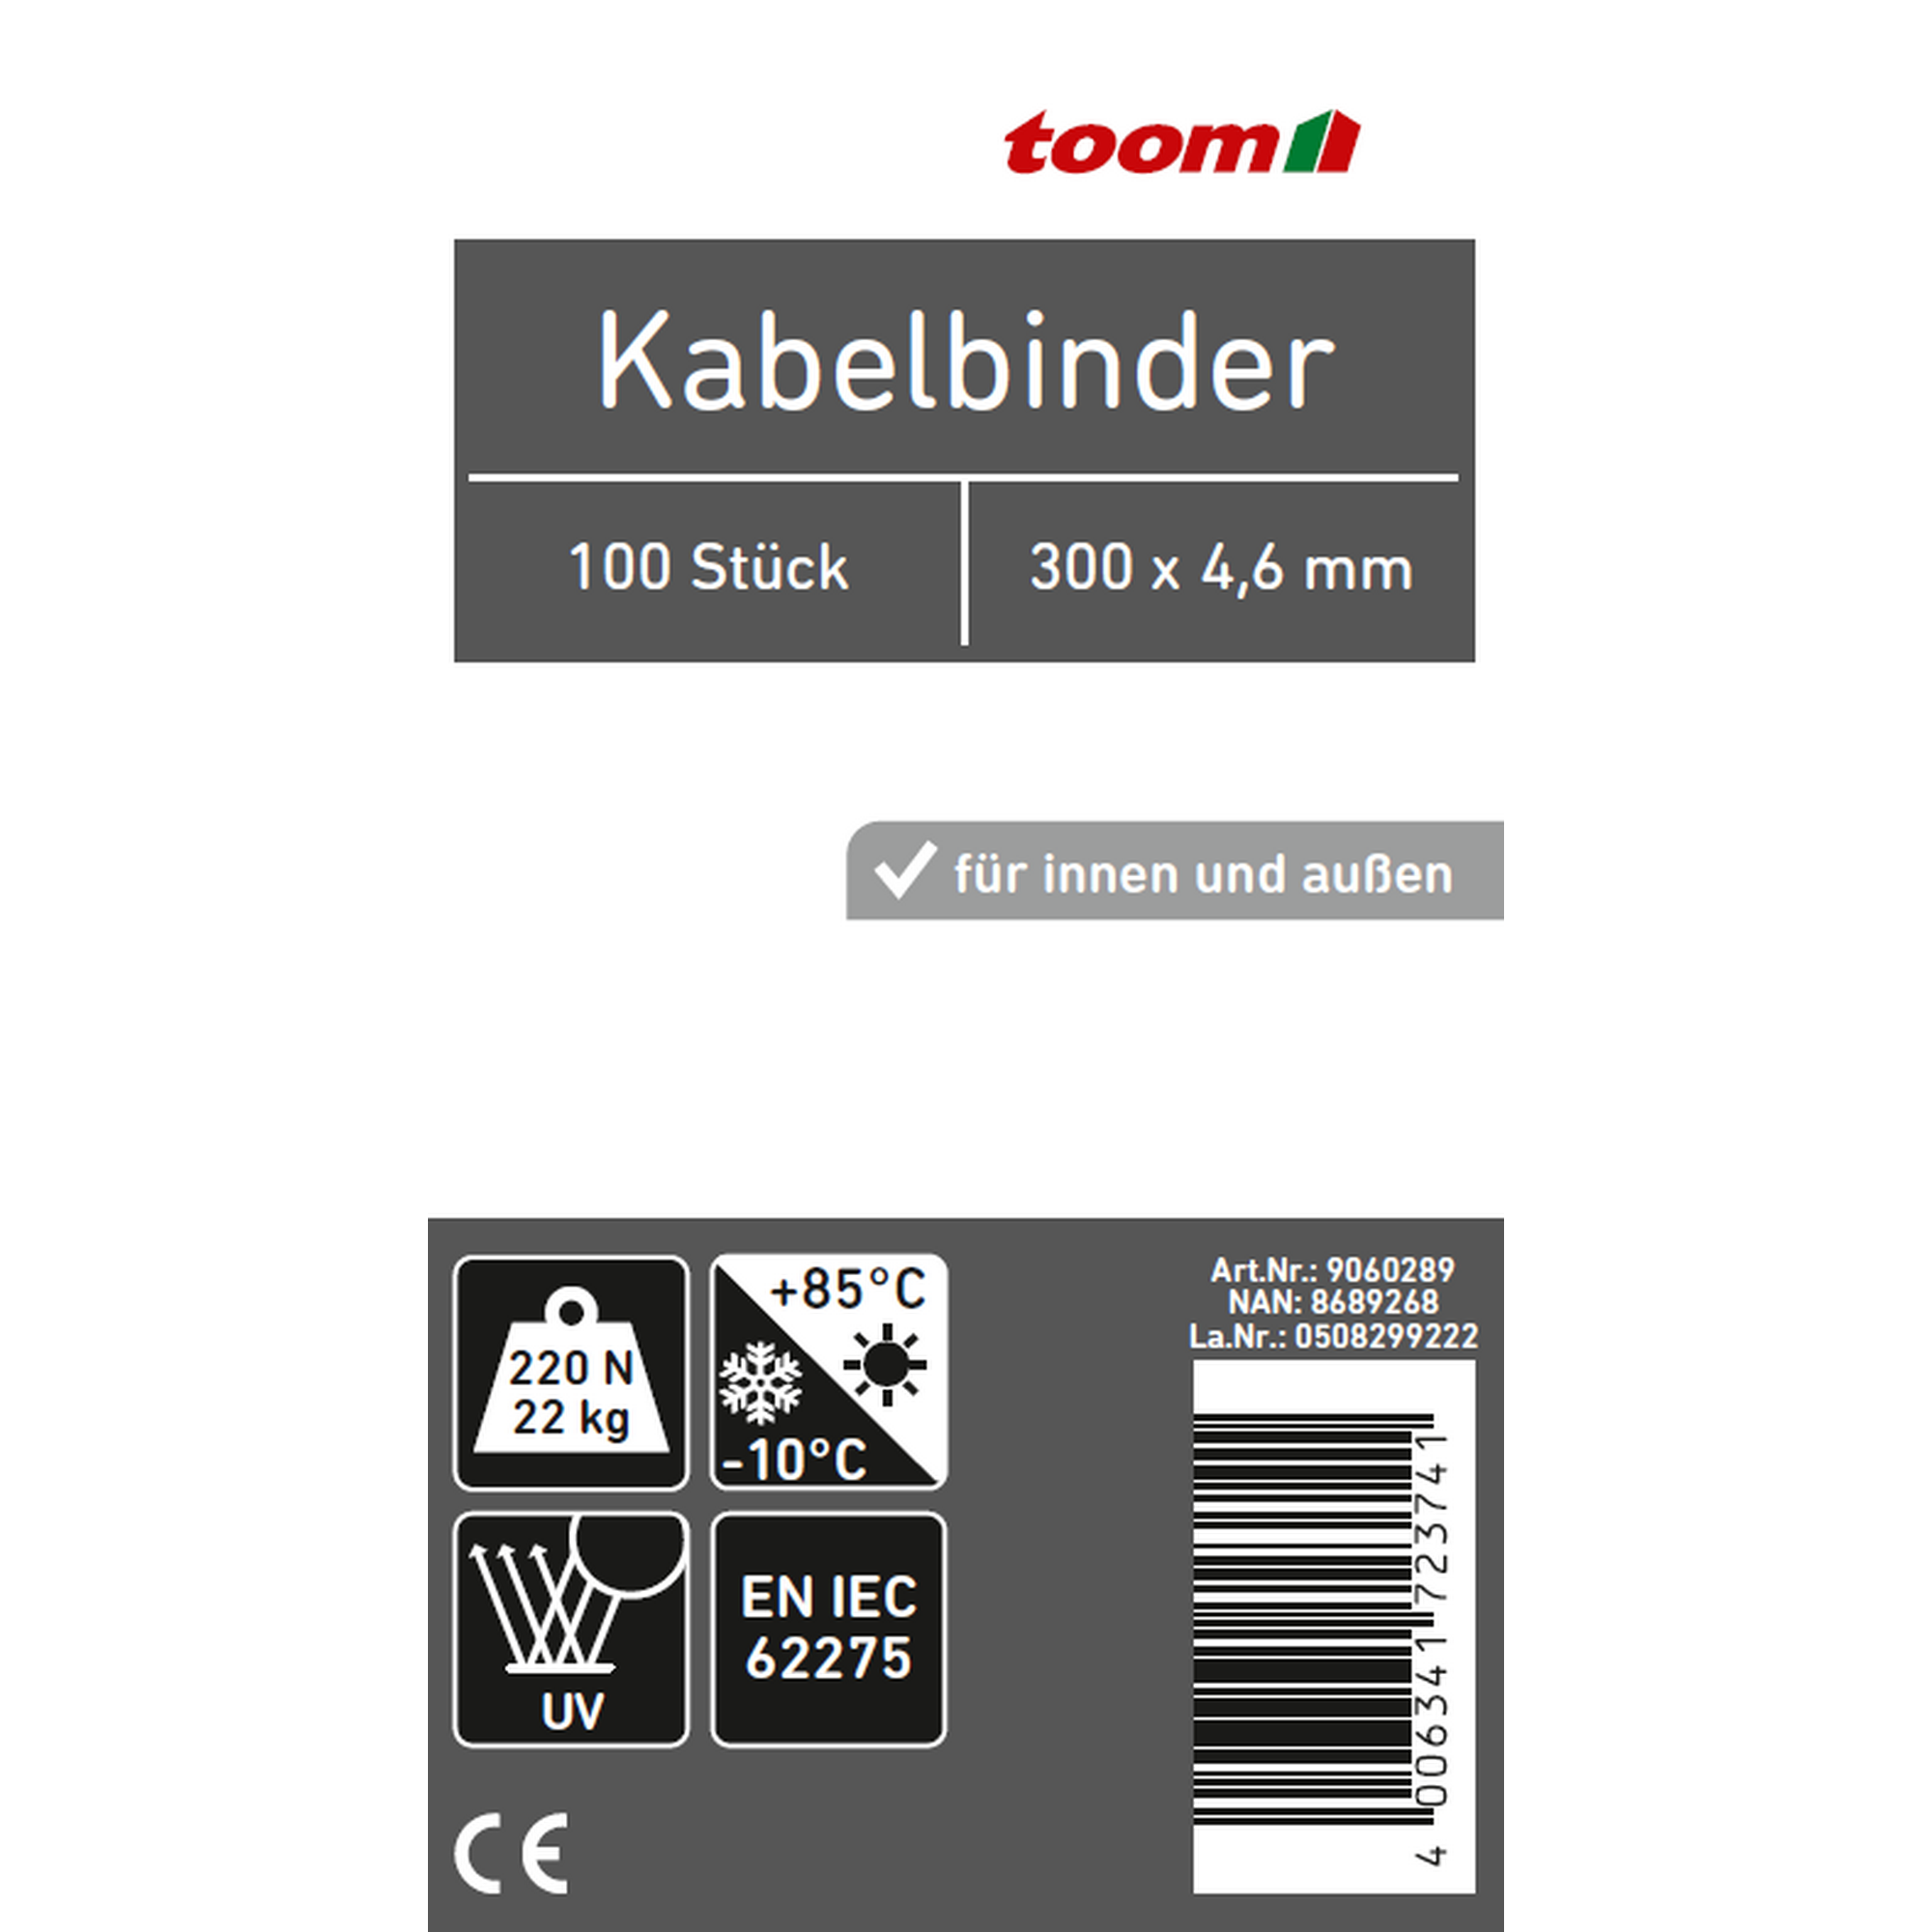 Kabelbinder schwarz 4,6 x 300 mm 100 Stück + product picture